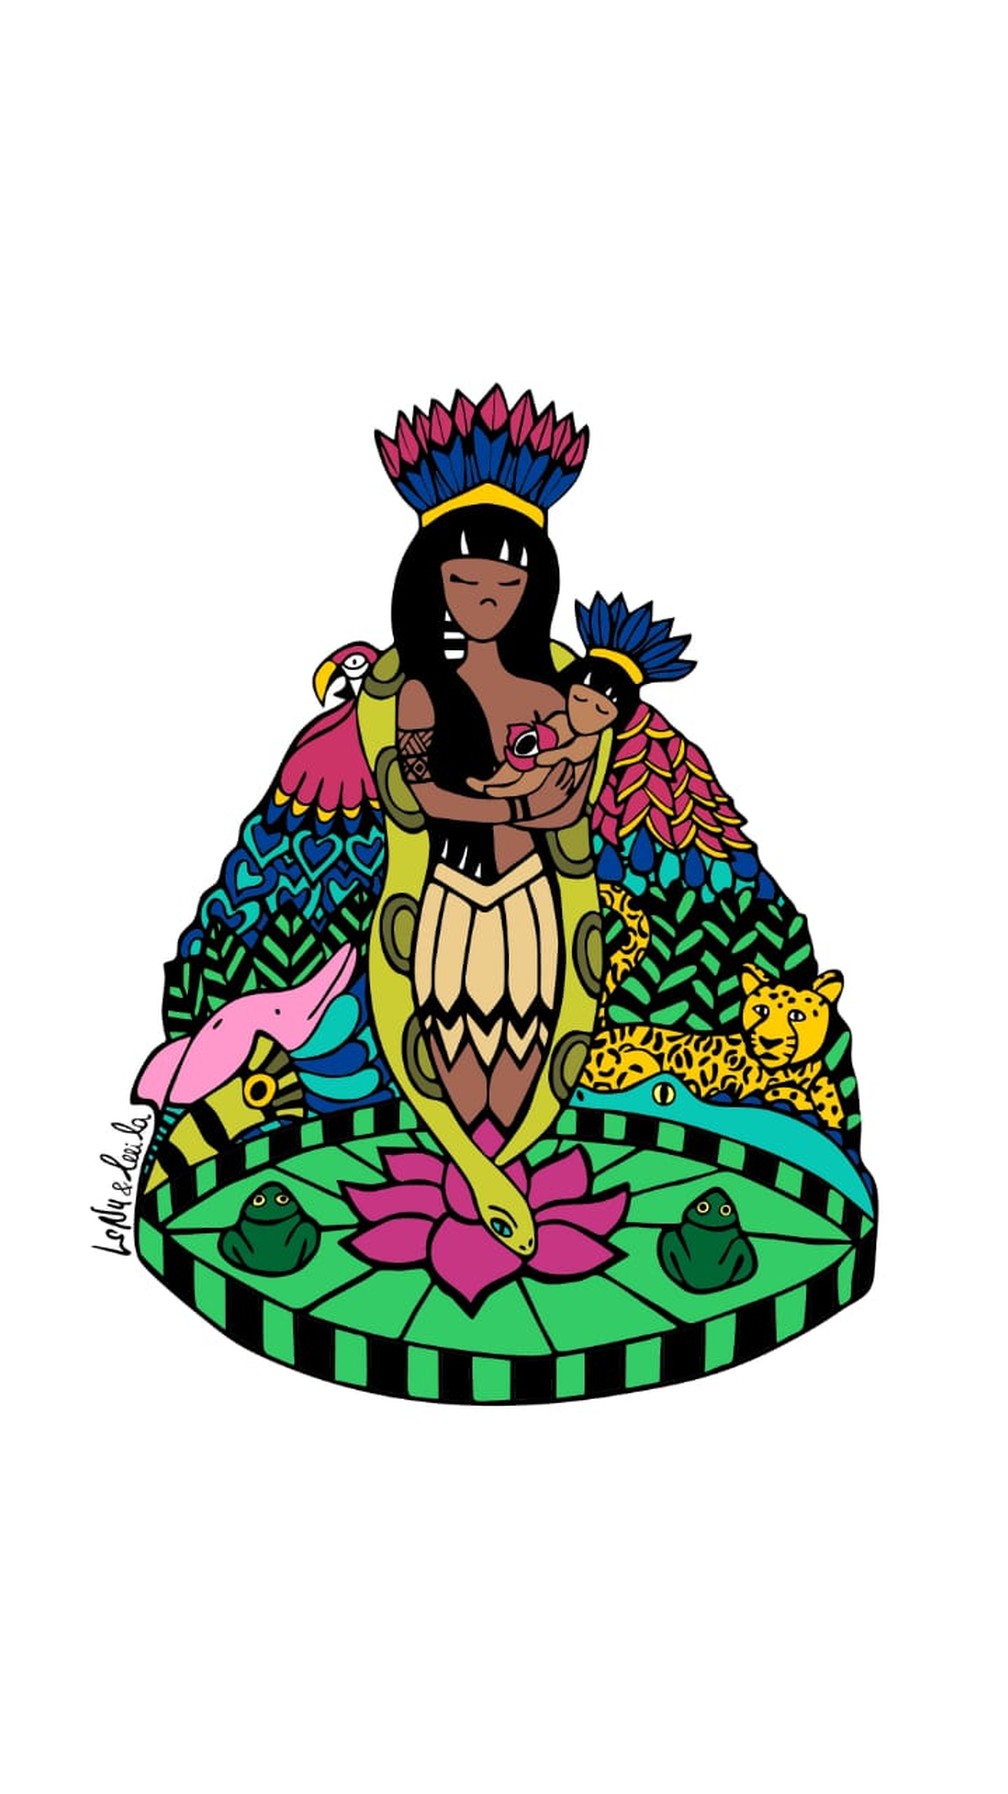 Mitologia brasileira - Deuses e lendas da cultura indígena nacional